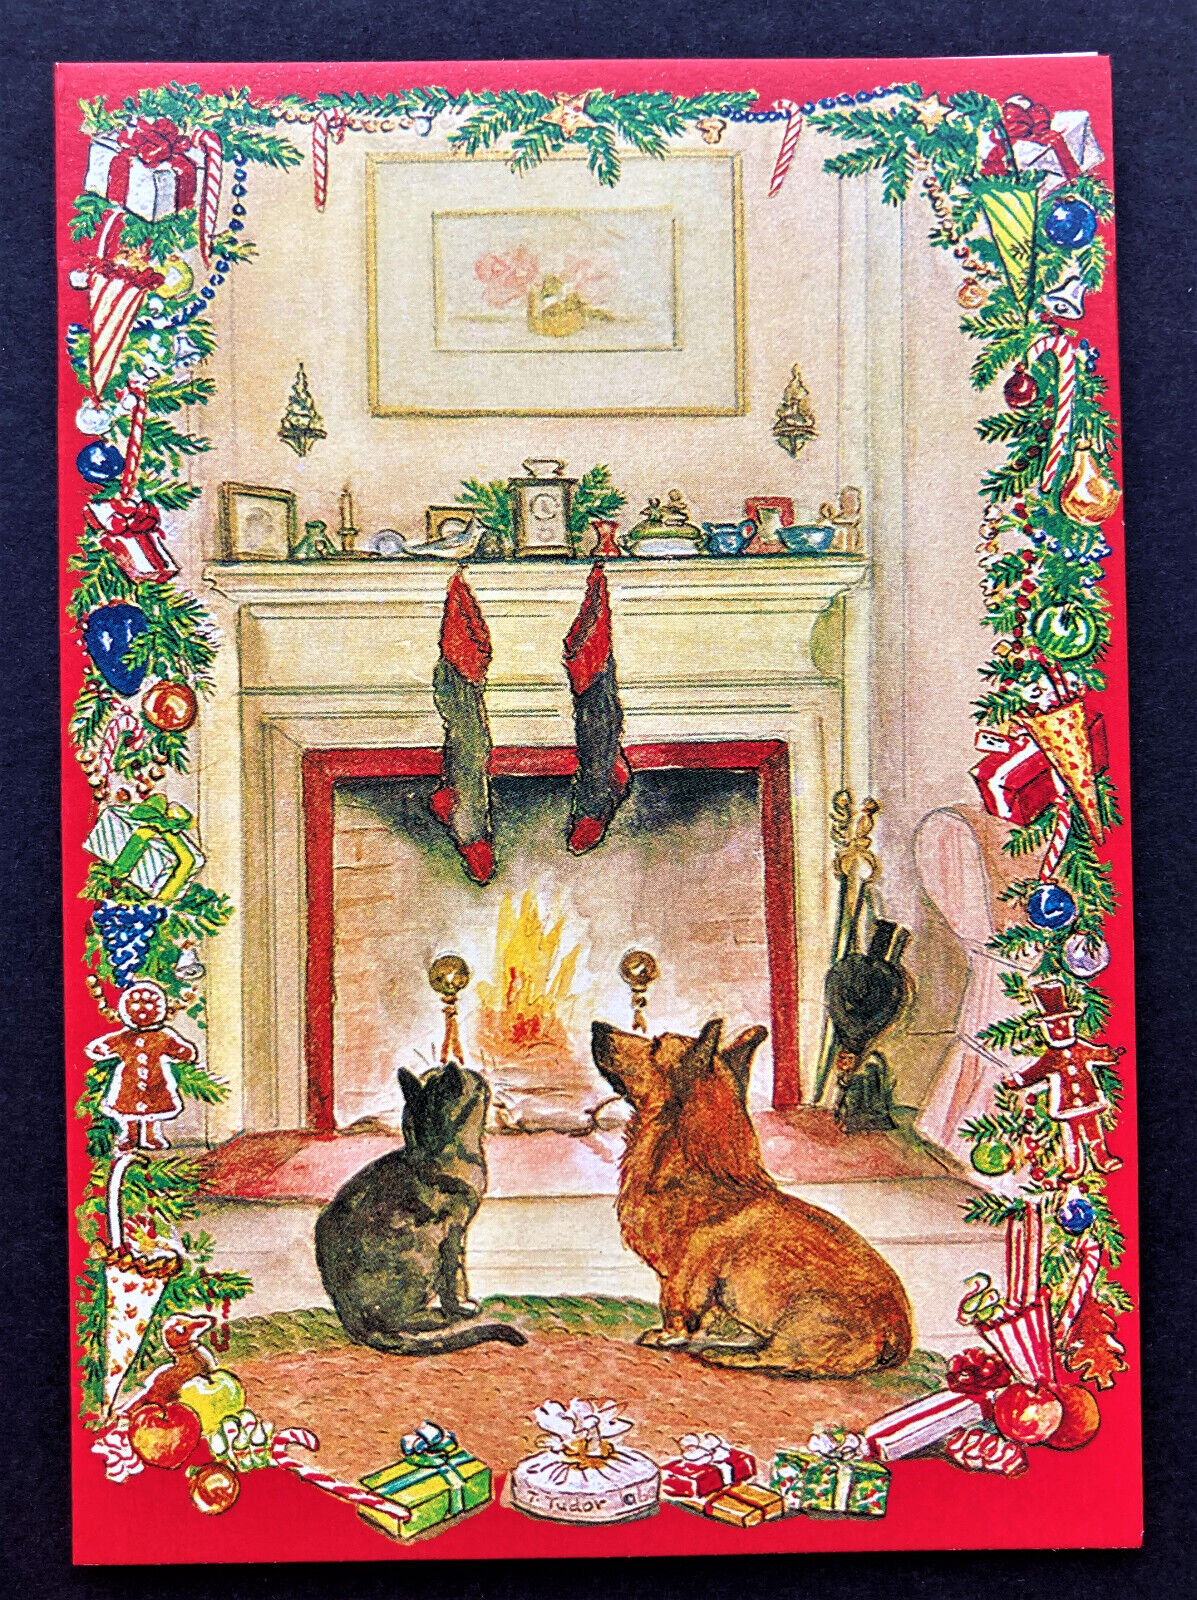 *ONE* NEW Tasha Tudor Caspari Christmas Card Tabby Cat Corgi Dog Fireplace 1